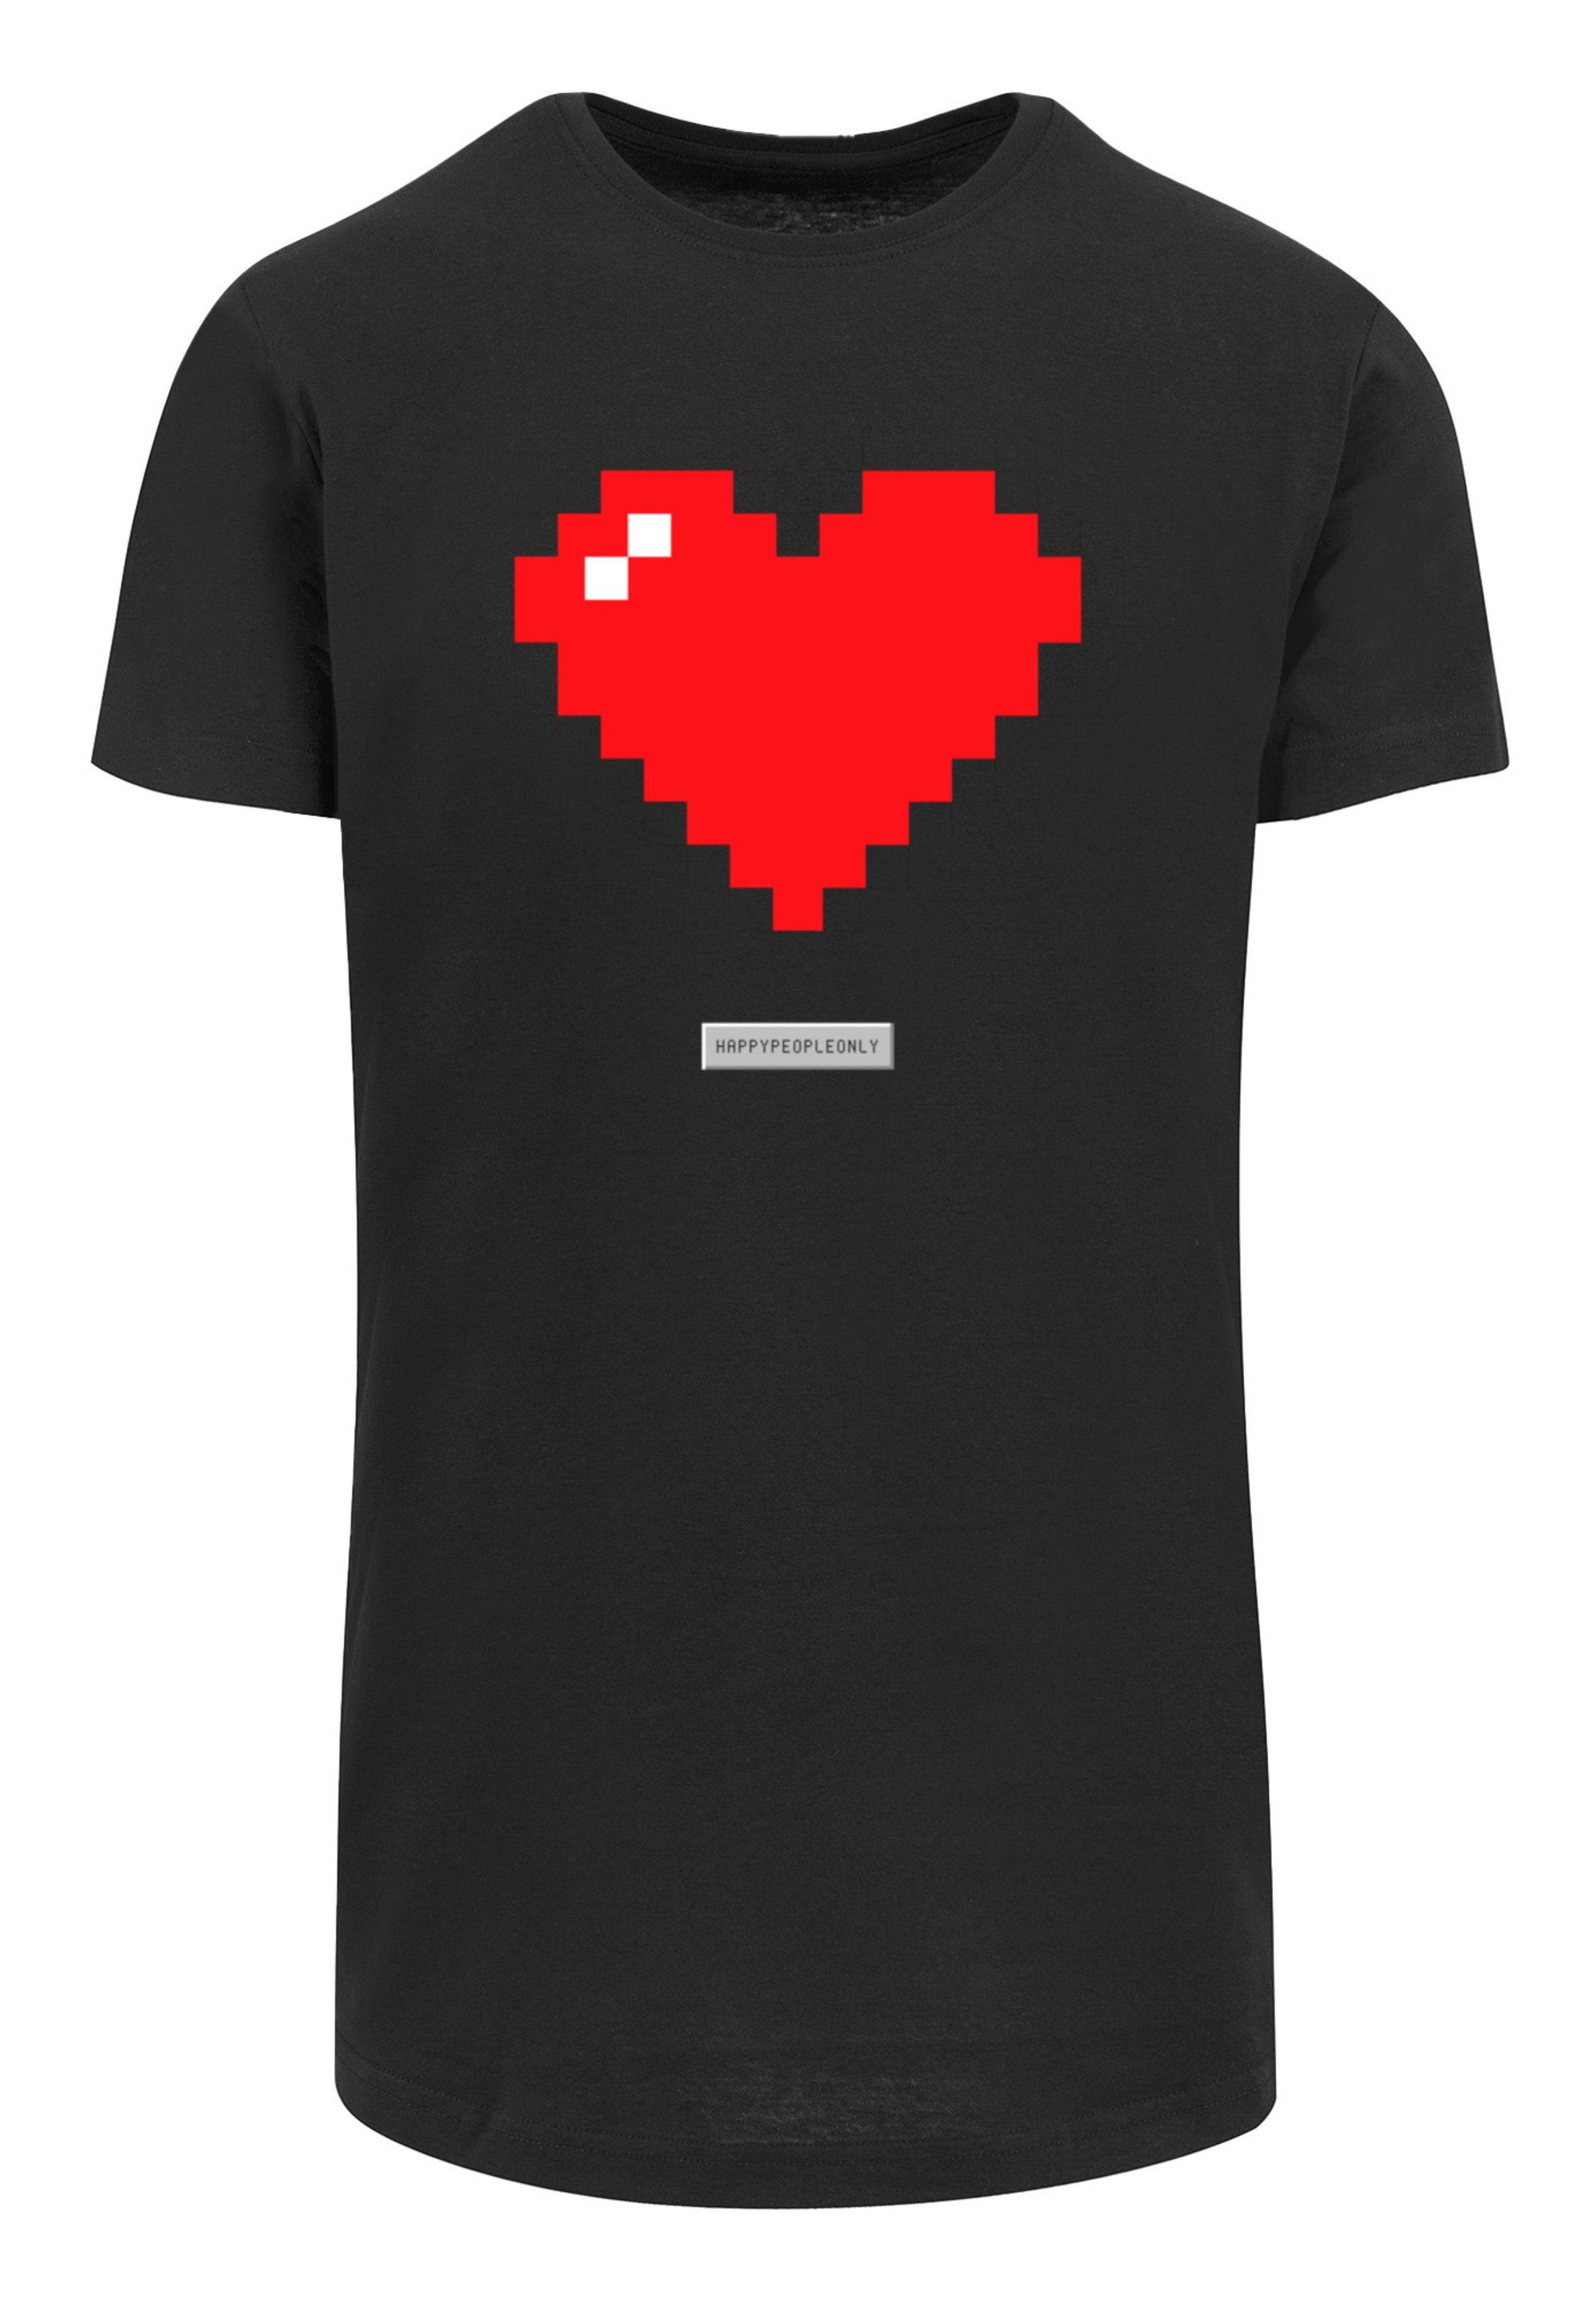 Pixel Herz People Happy Print F4NT4STIC Vibes Good T-Shirt schwarz